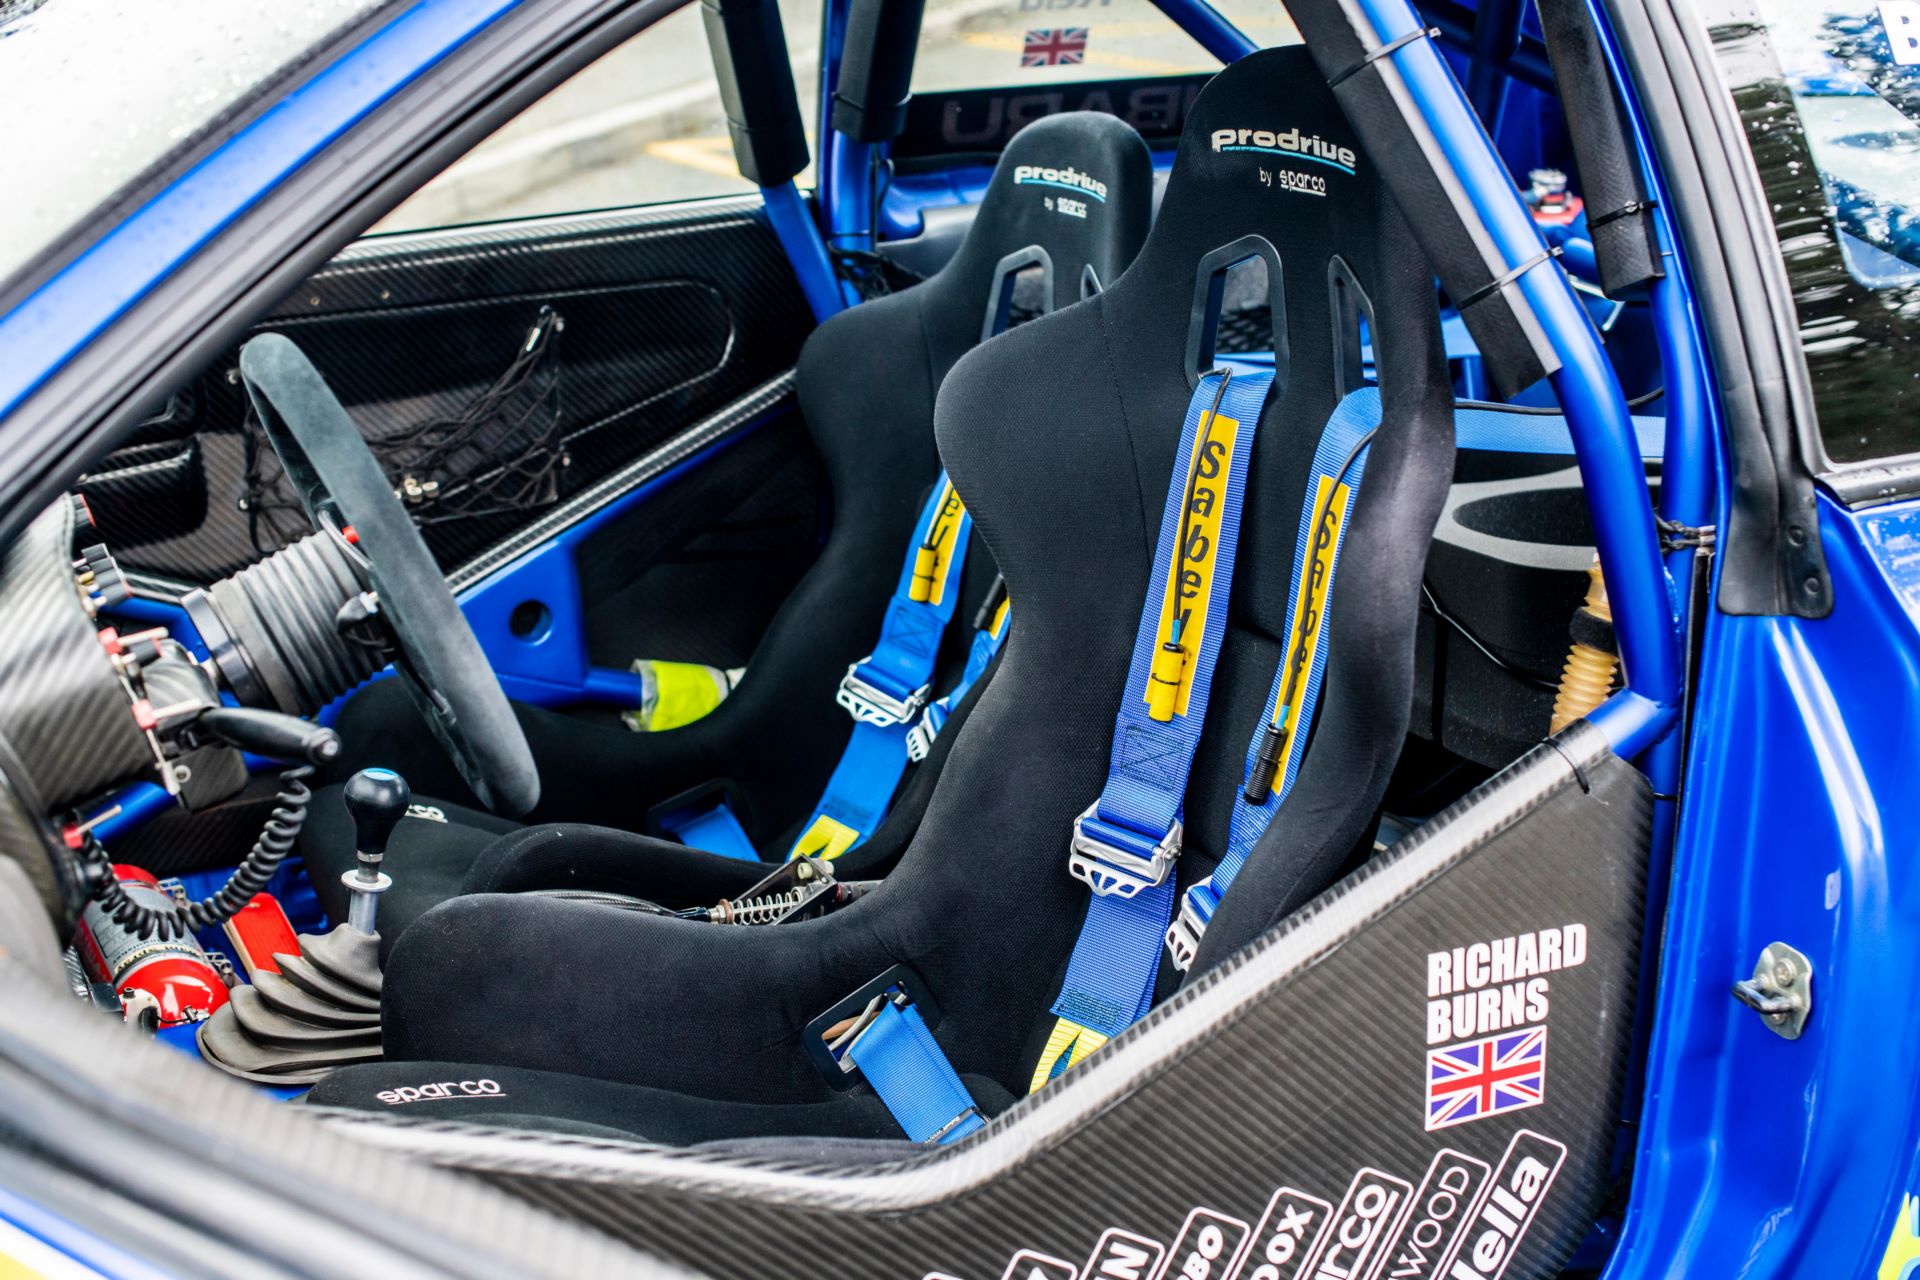 Subaru-Impreza-WRC-Richard-Burns-auction-10